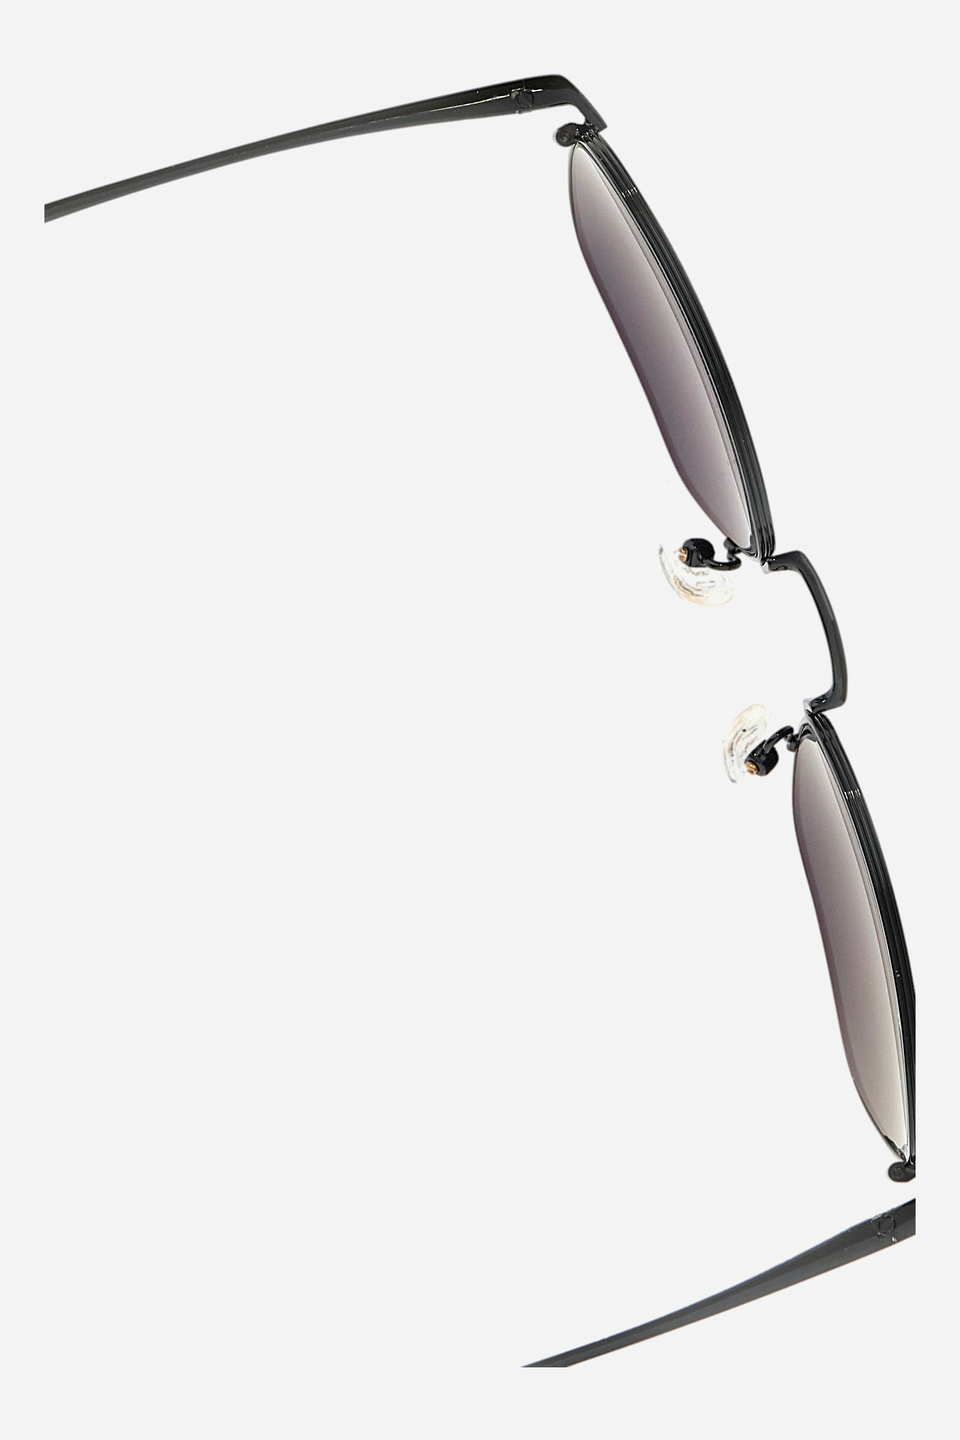 Sonnenbrille aus Metall quadratisches Modell | La Martina - Official Online Shop